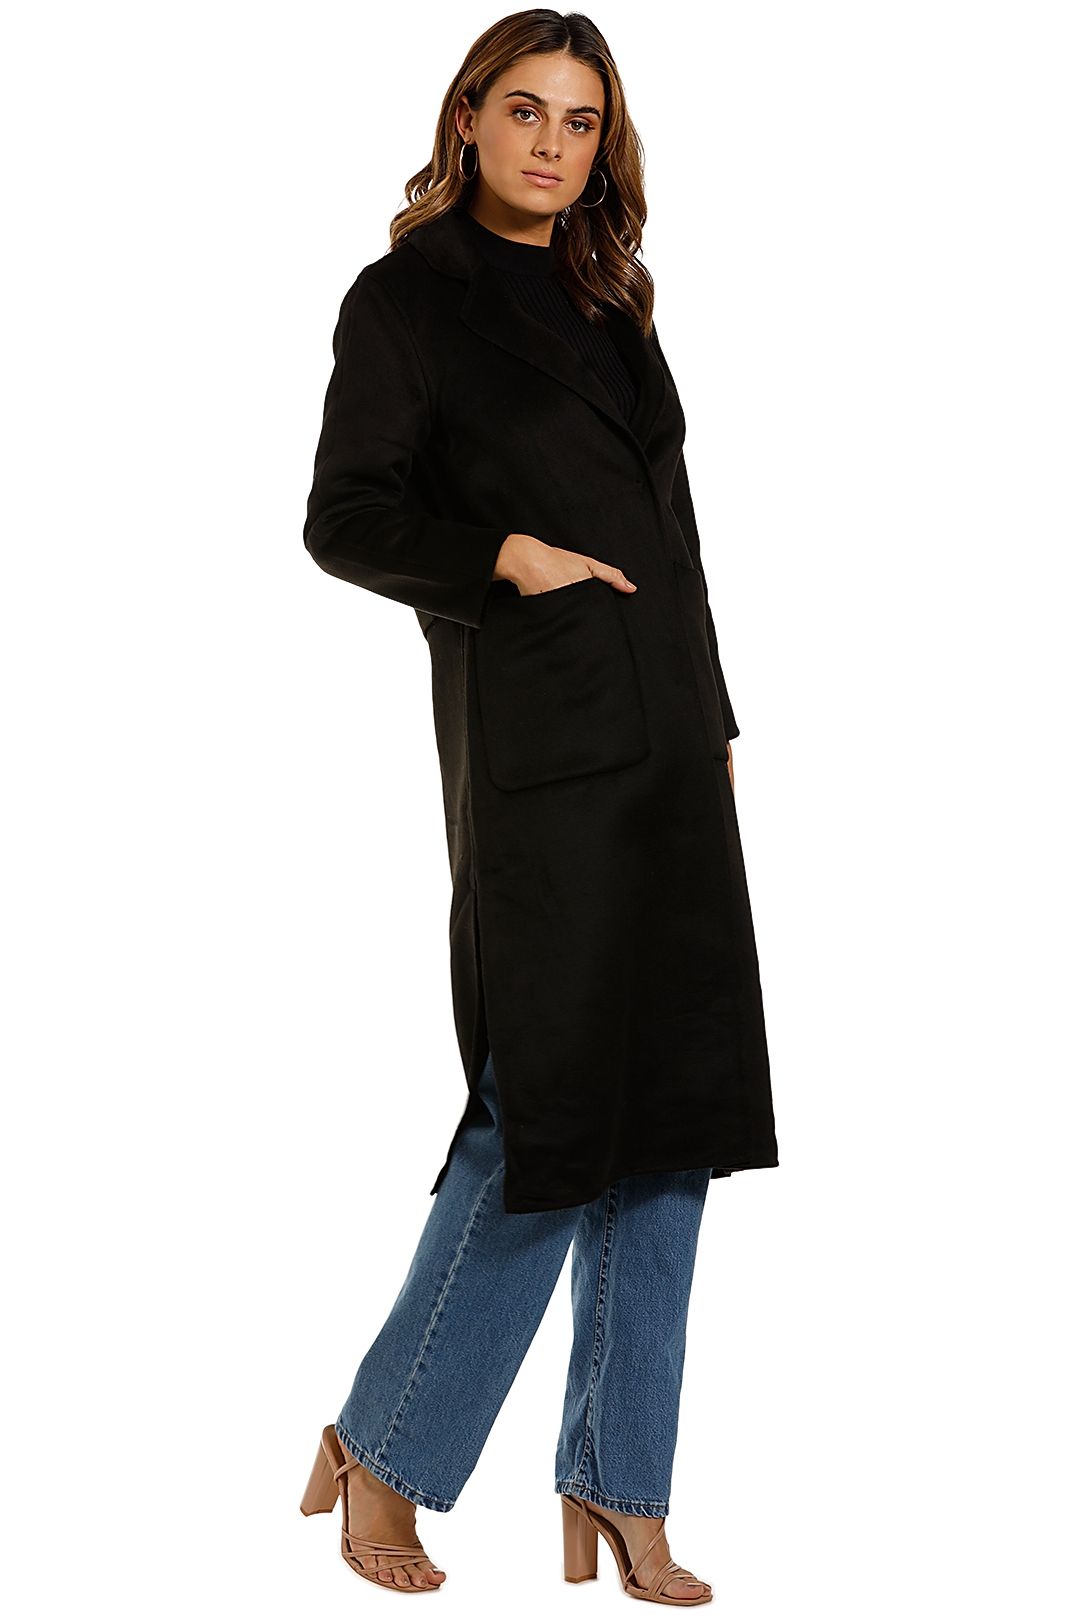 Unreal Fur Loving Coat pockets Black